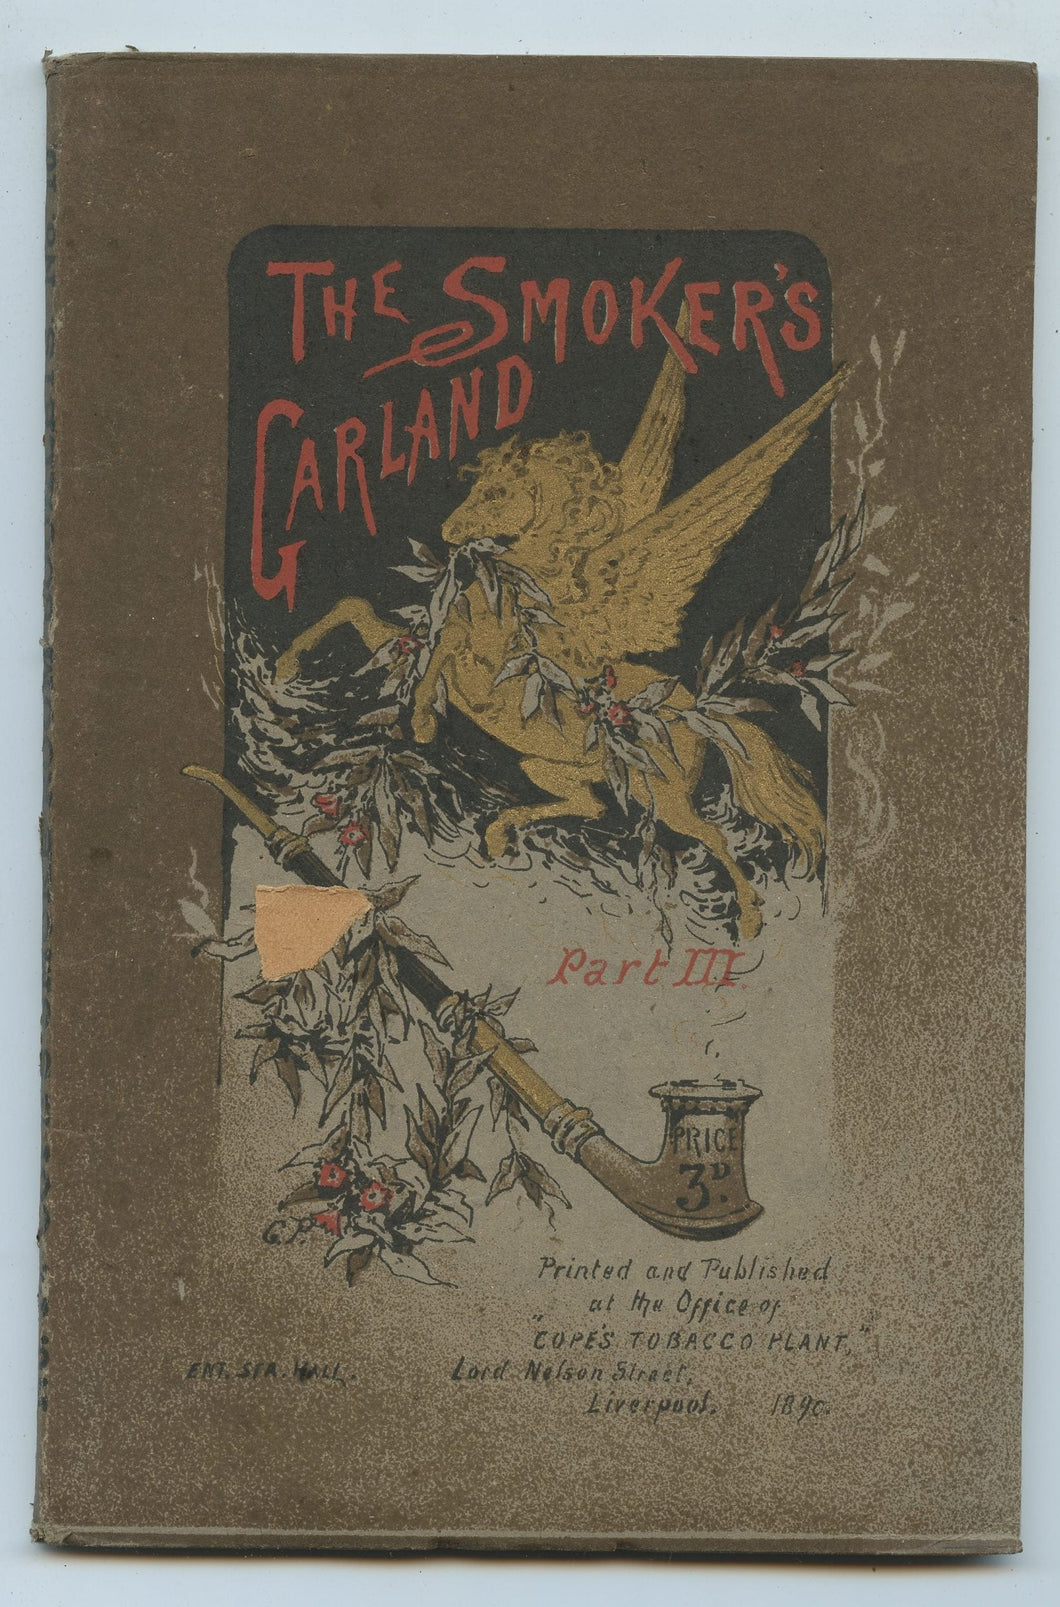 The Smoker's Garland Part III